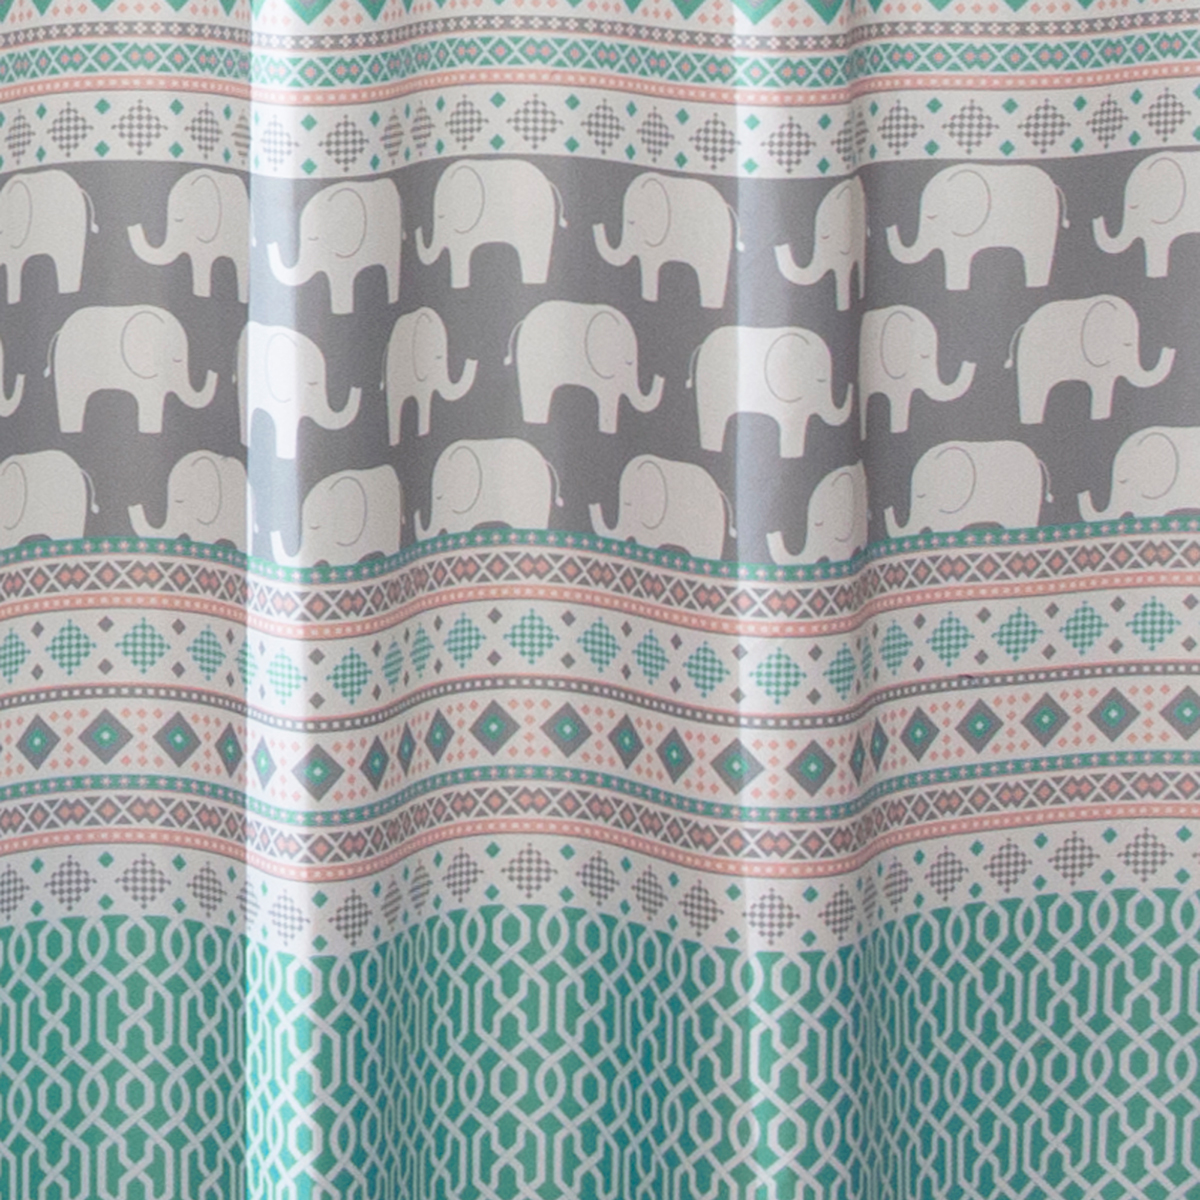 Lush Decor(R) Elephant Stripe Shower Curtain